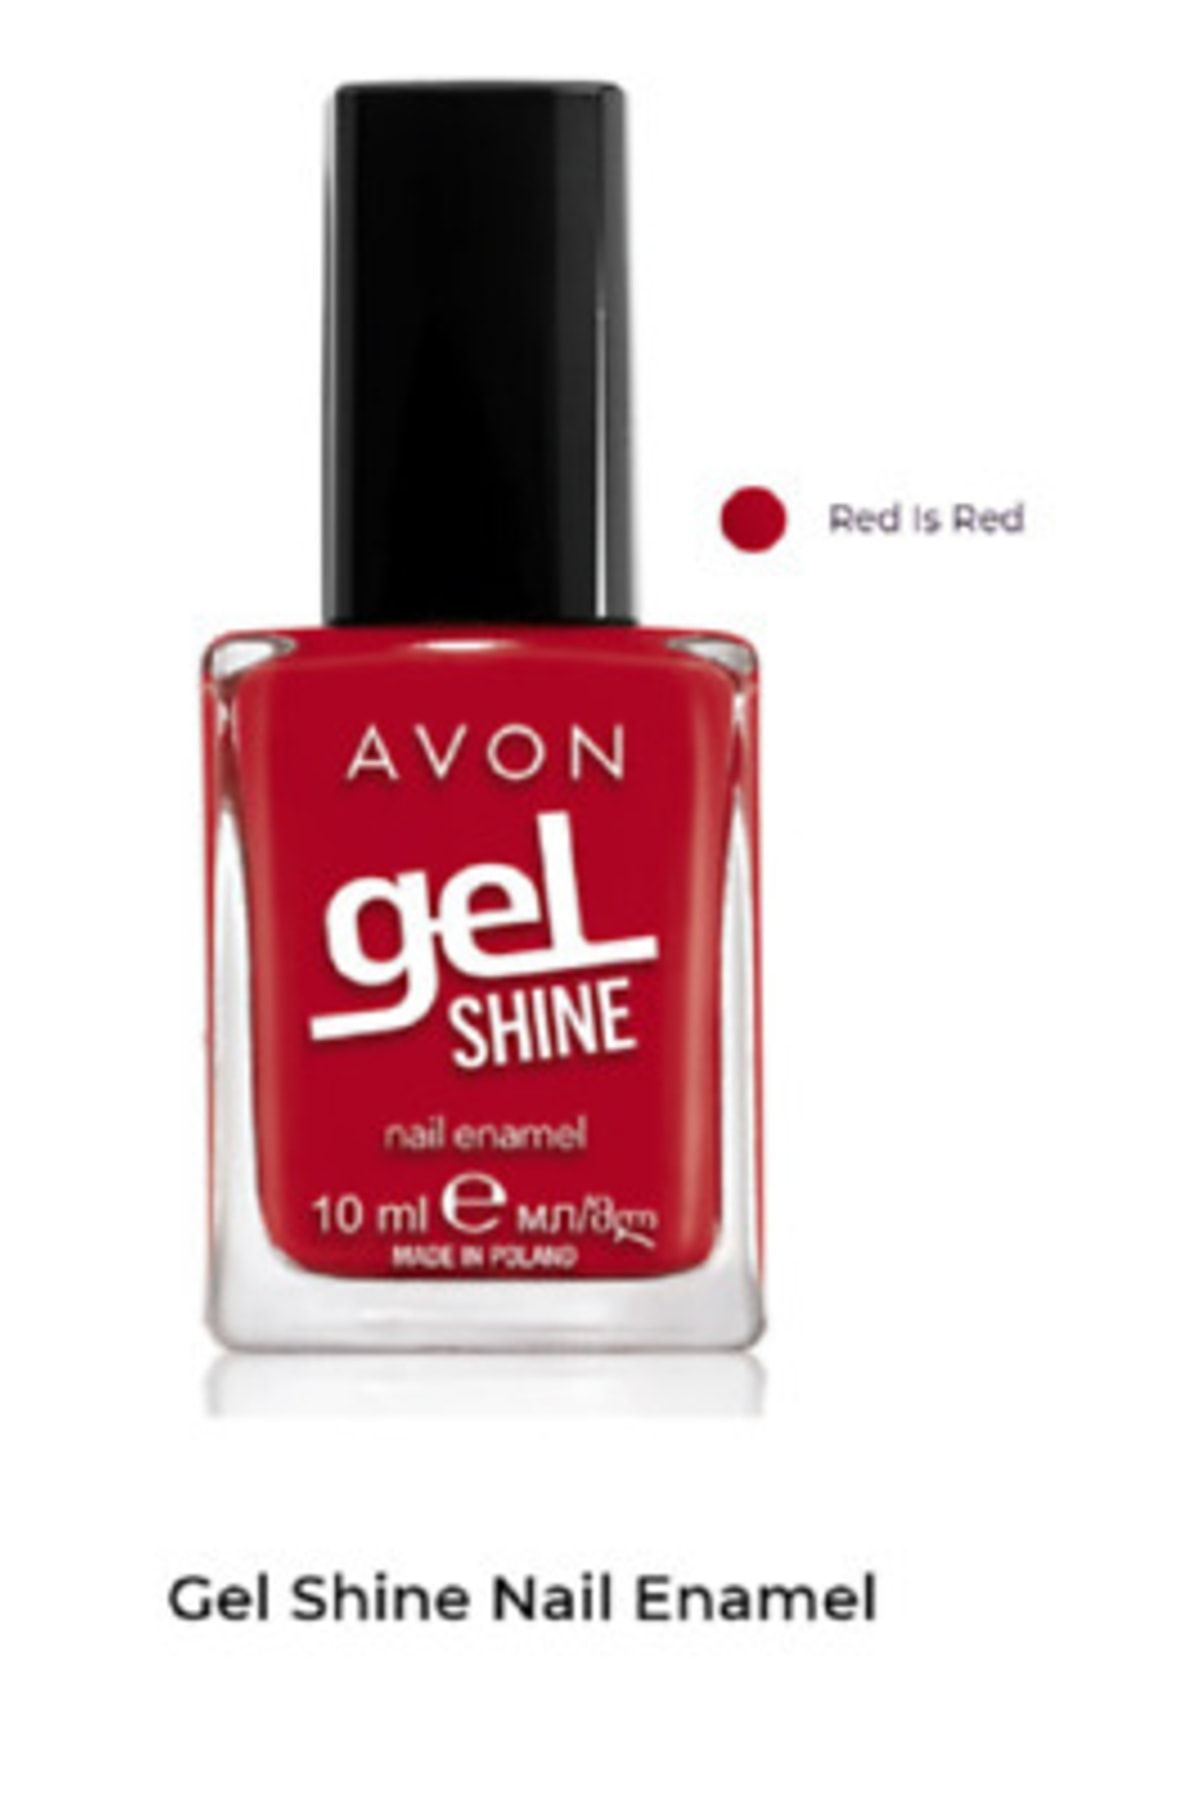 Avon Gel Shine Oje Red Is Red. 07610